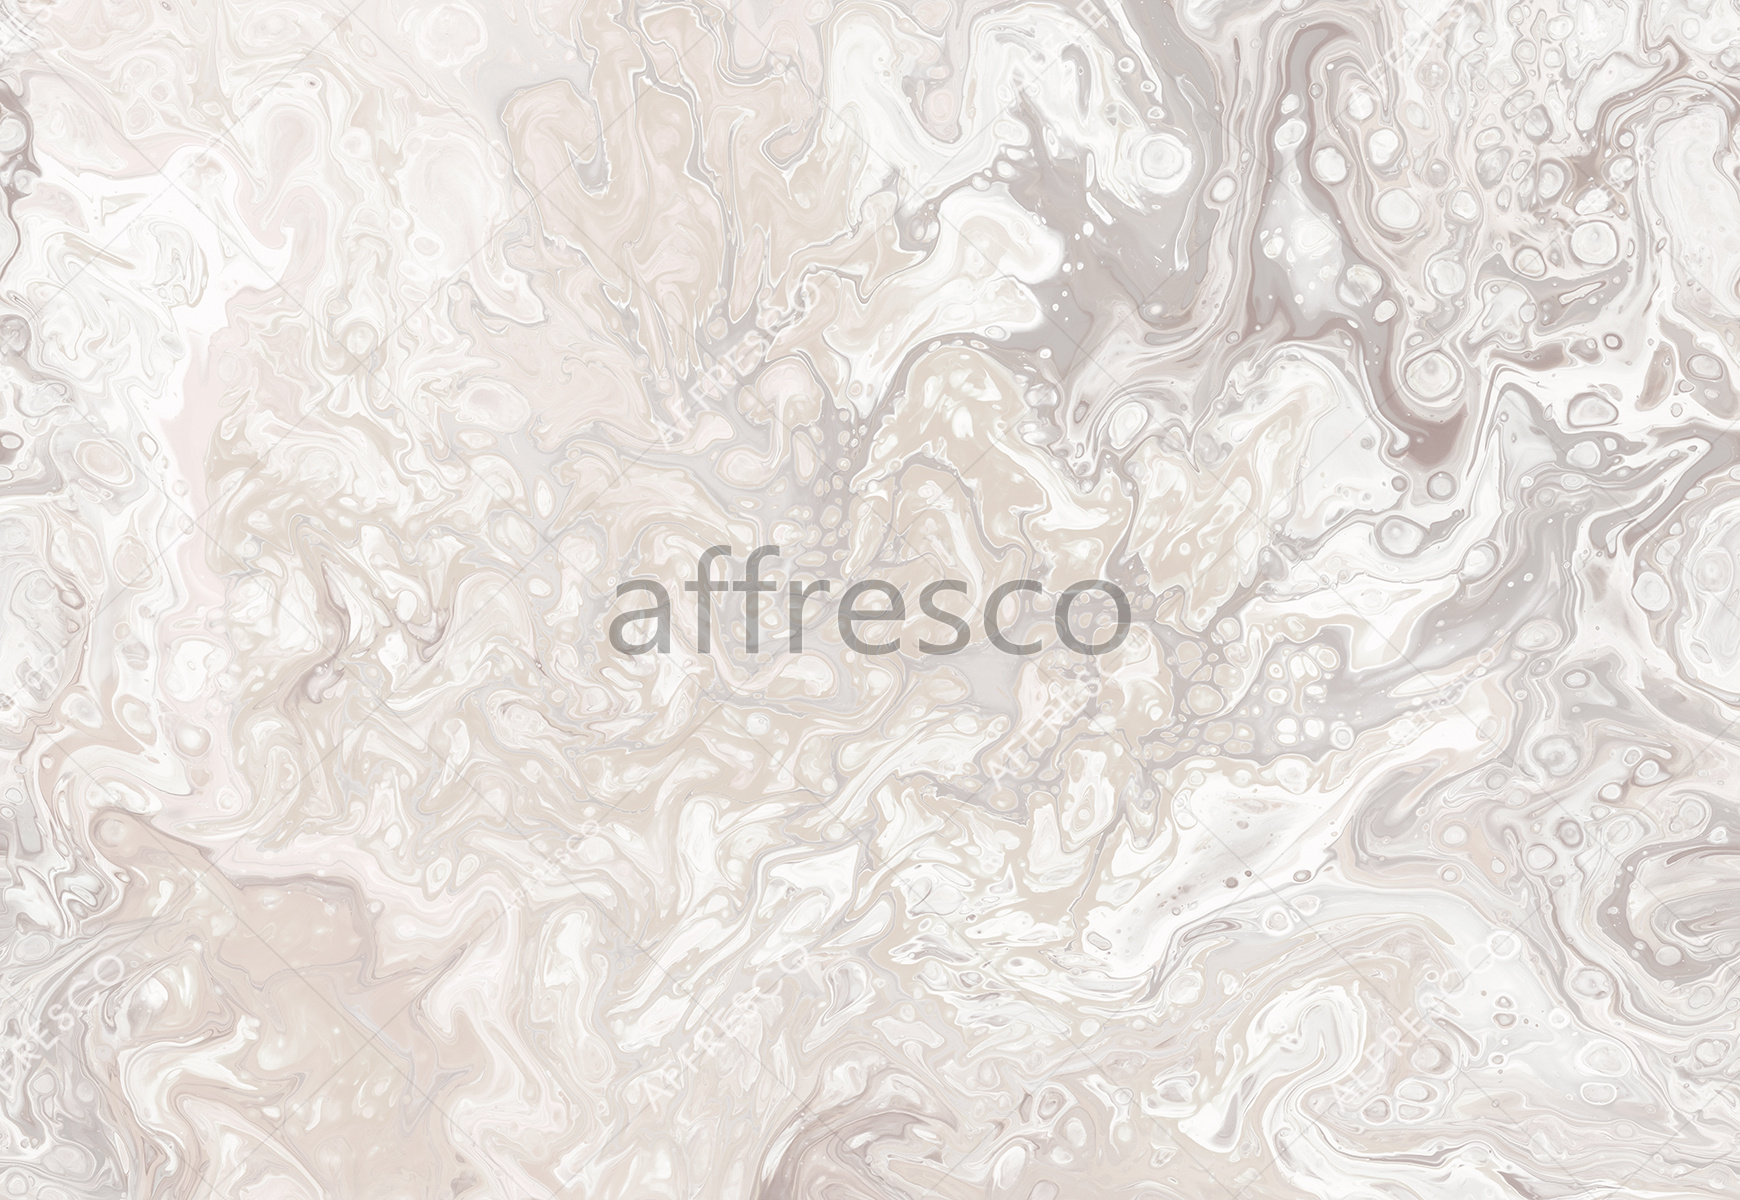 ID138701 | Textures |  | Affresco Factory